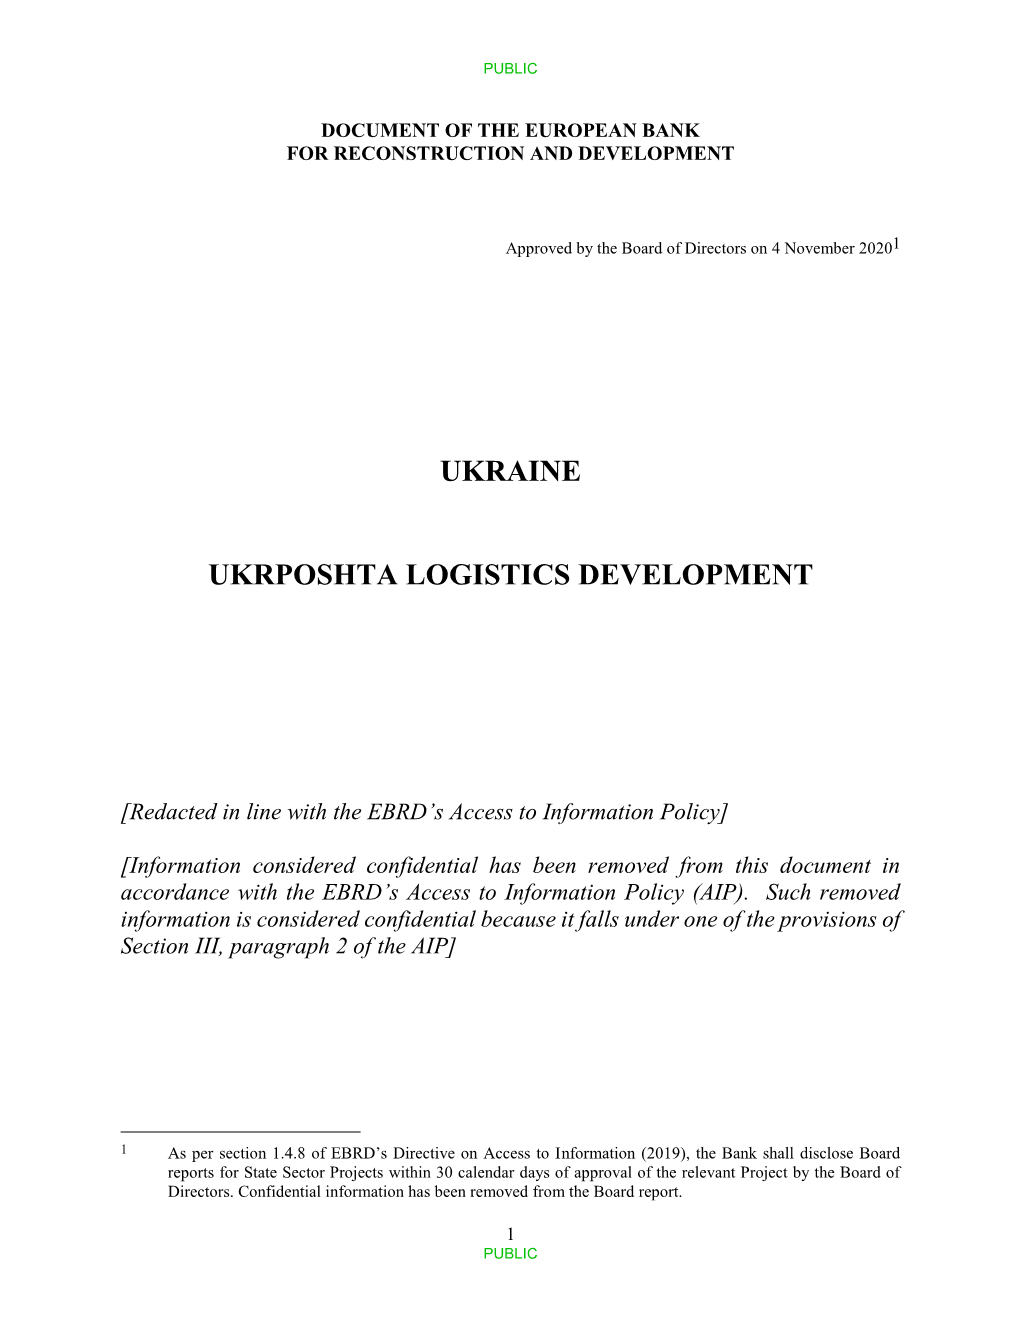 Ukraine Ukrposhta Logistics Development